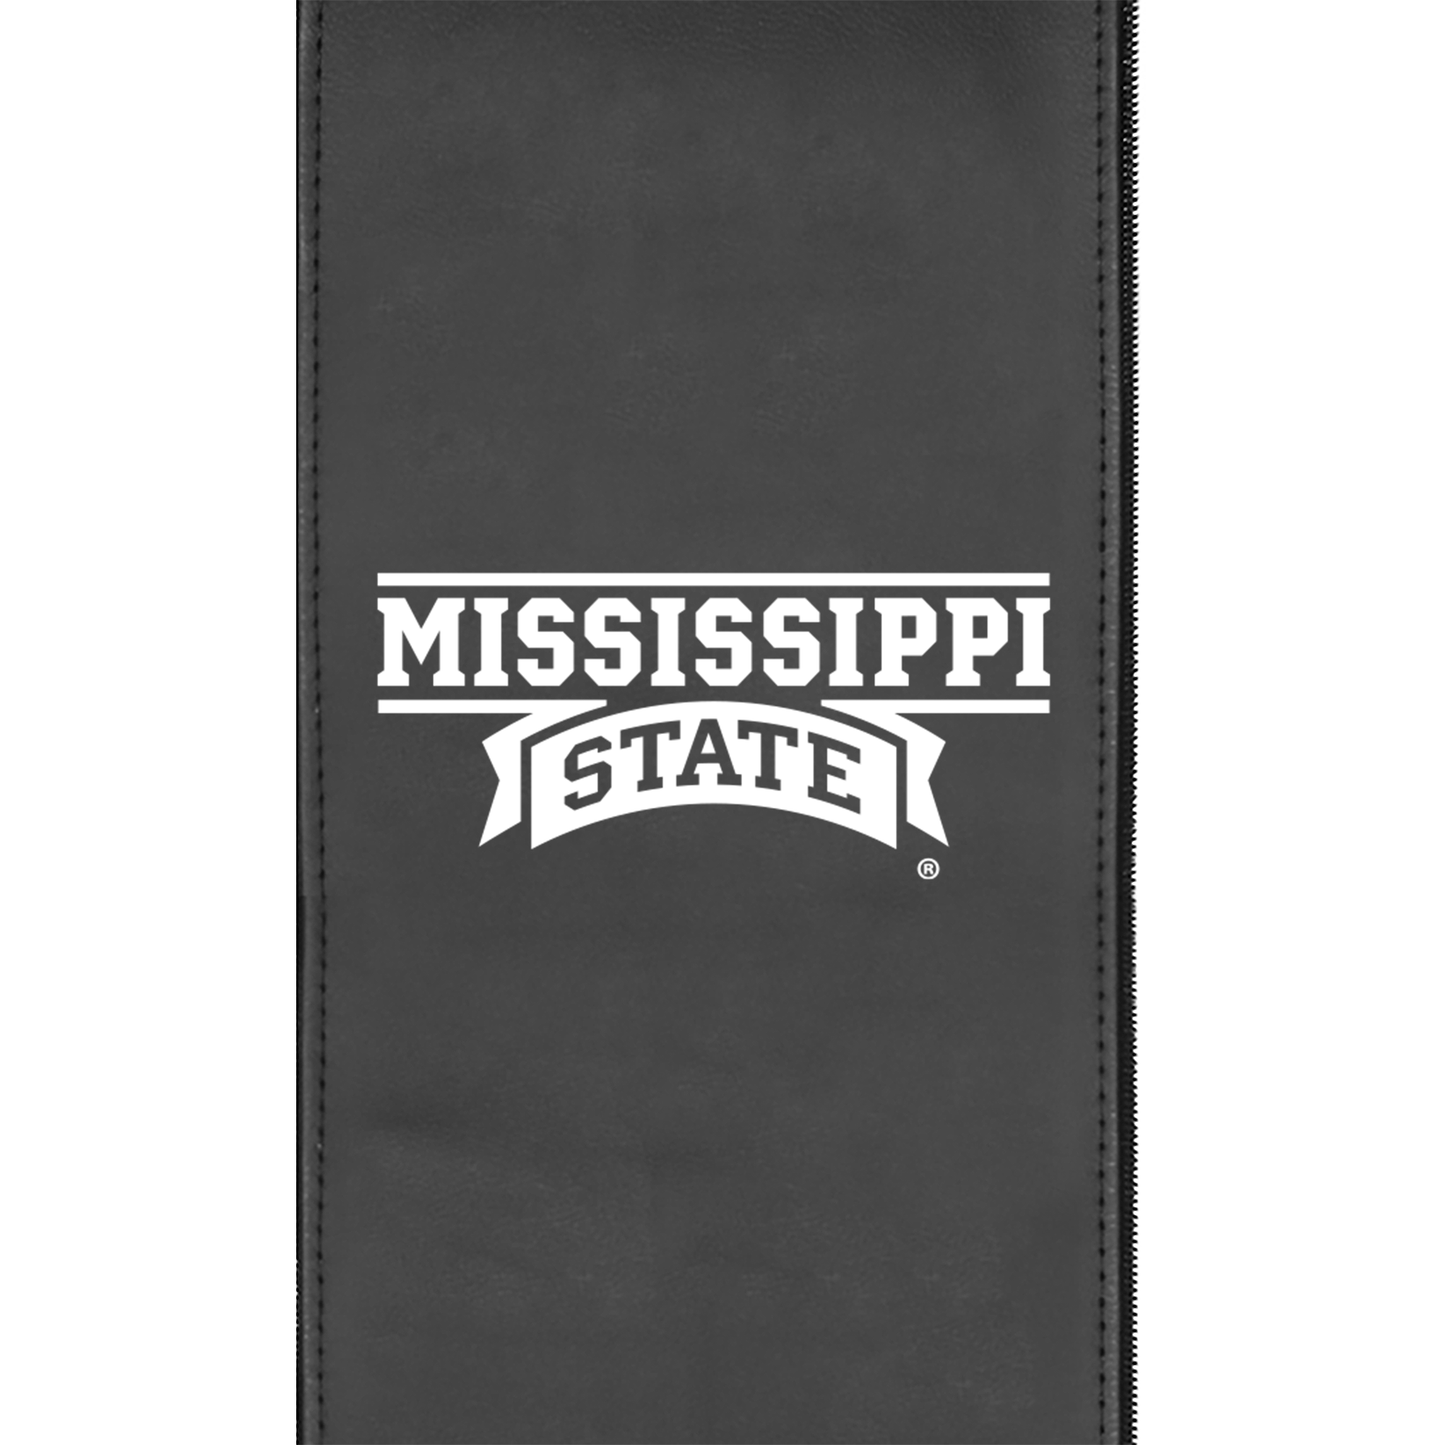 Swivel Bar Stool 2000 with Mississippi State Alternate